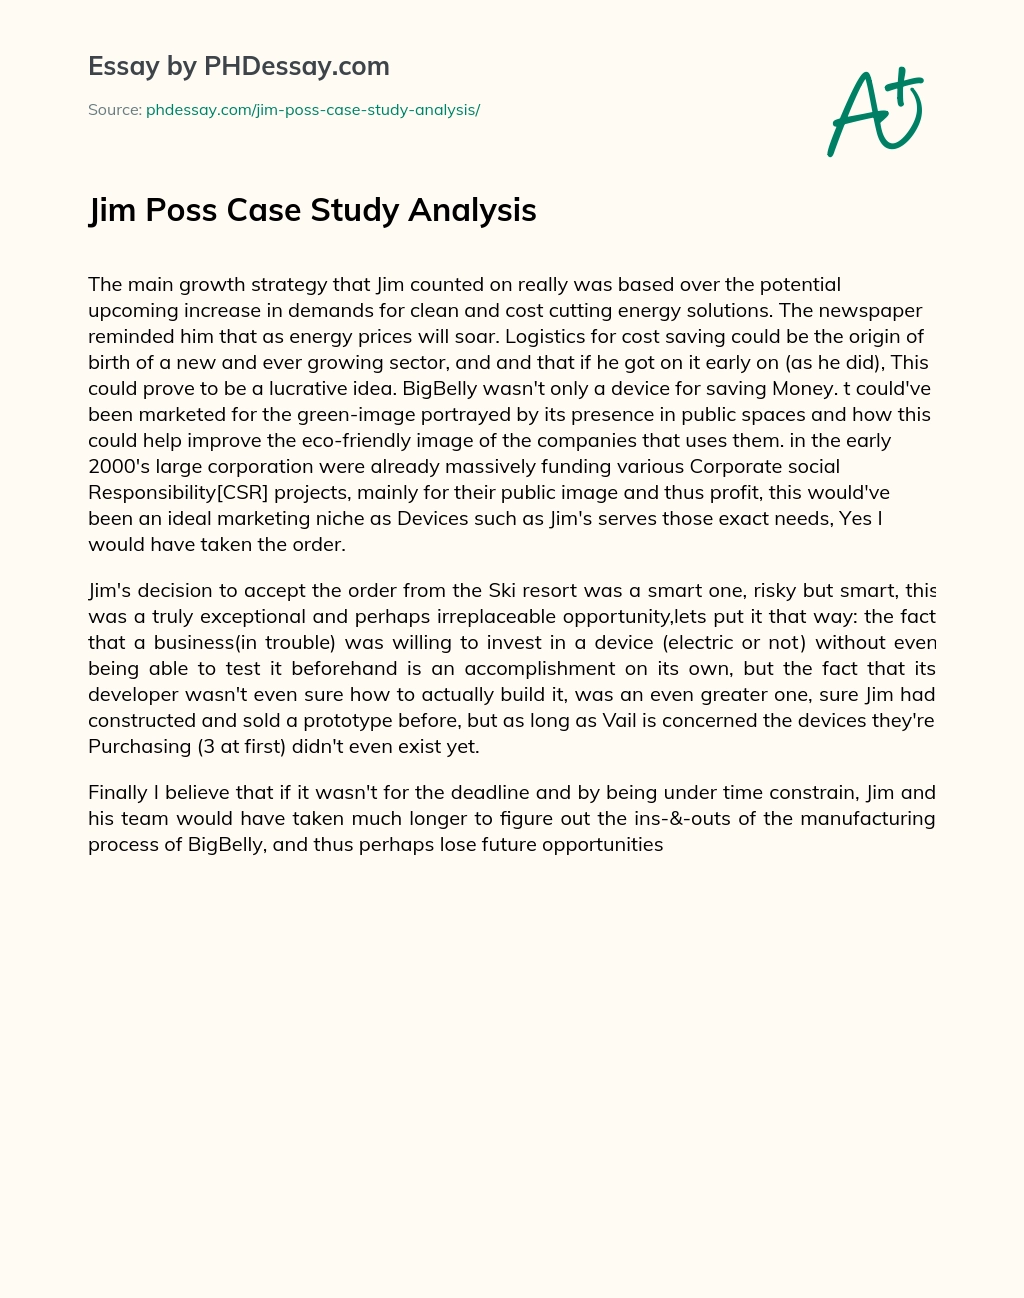 Jim Poss Case Study Analysis essay